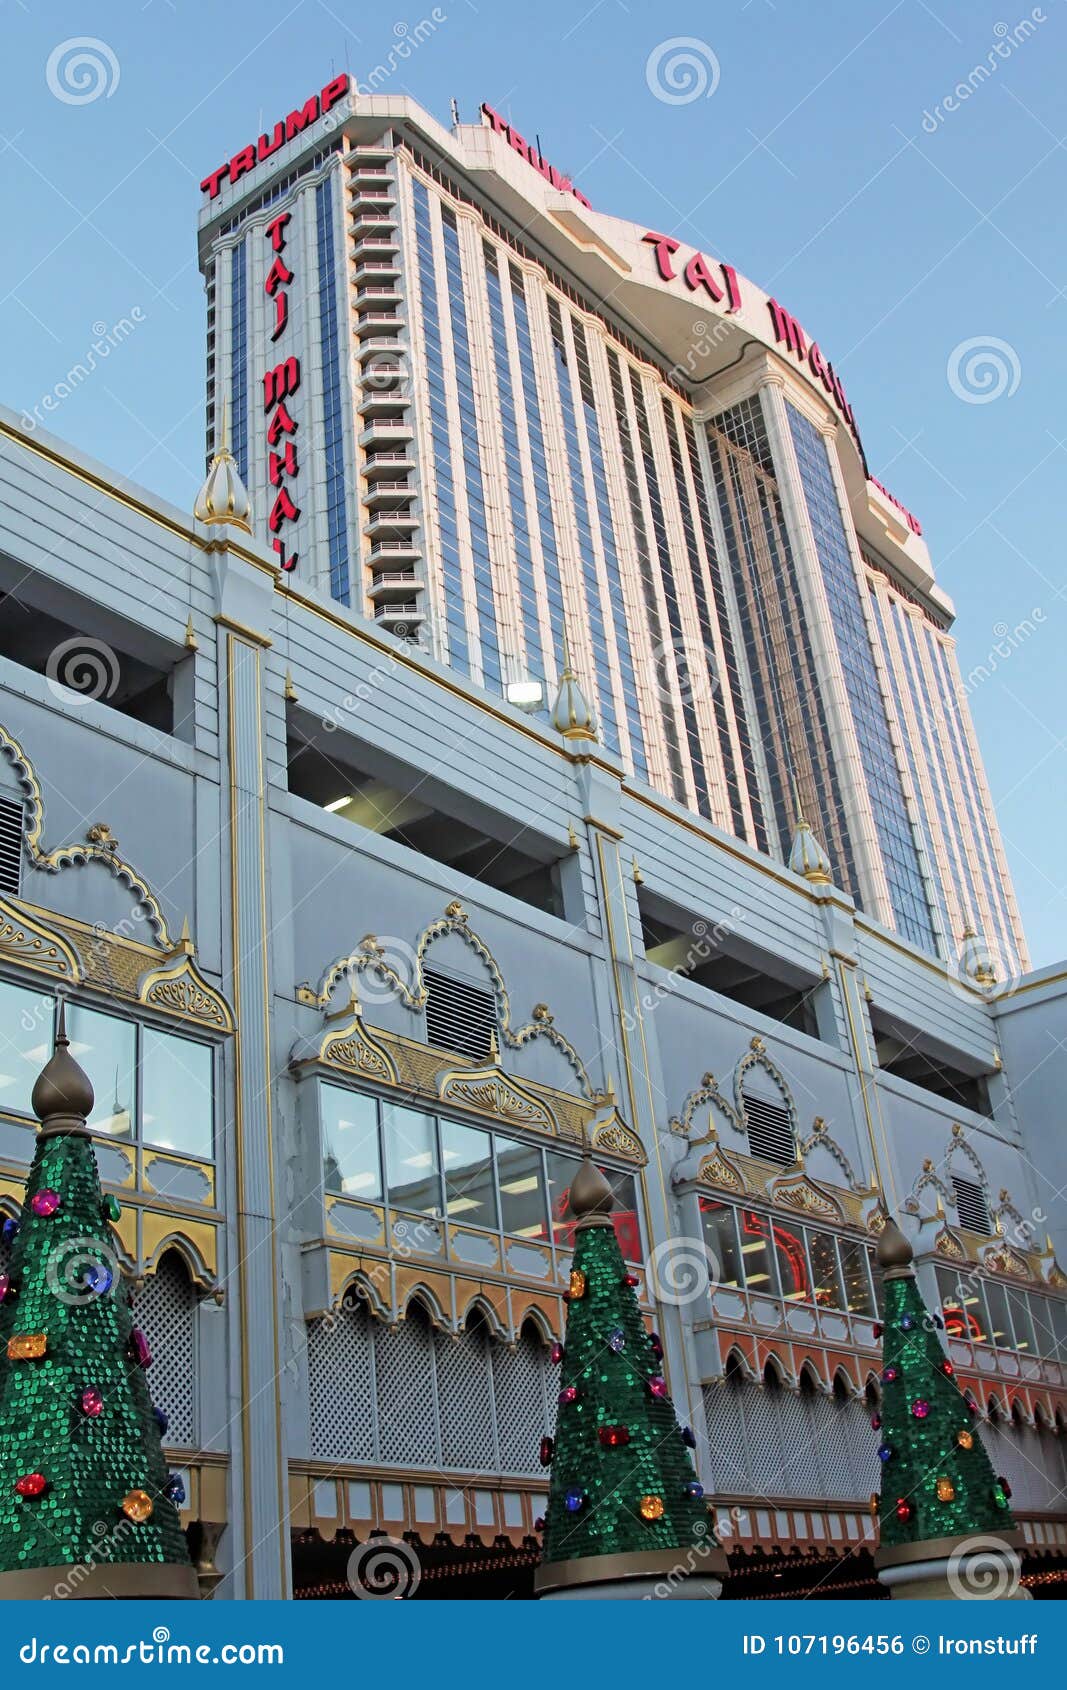 Trump Taj Mahal Hotel and Casino, Atlantic City, USA Editorial Photo -  Image of america, design: 107196456